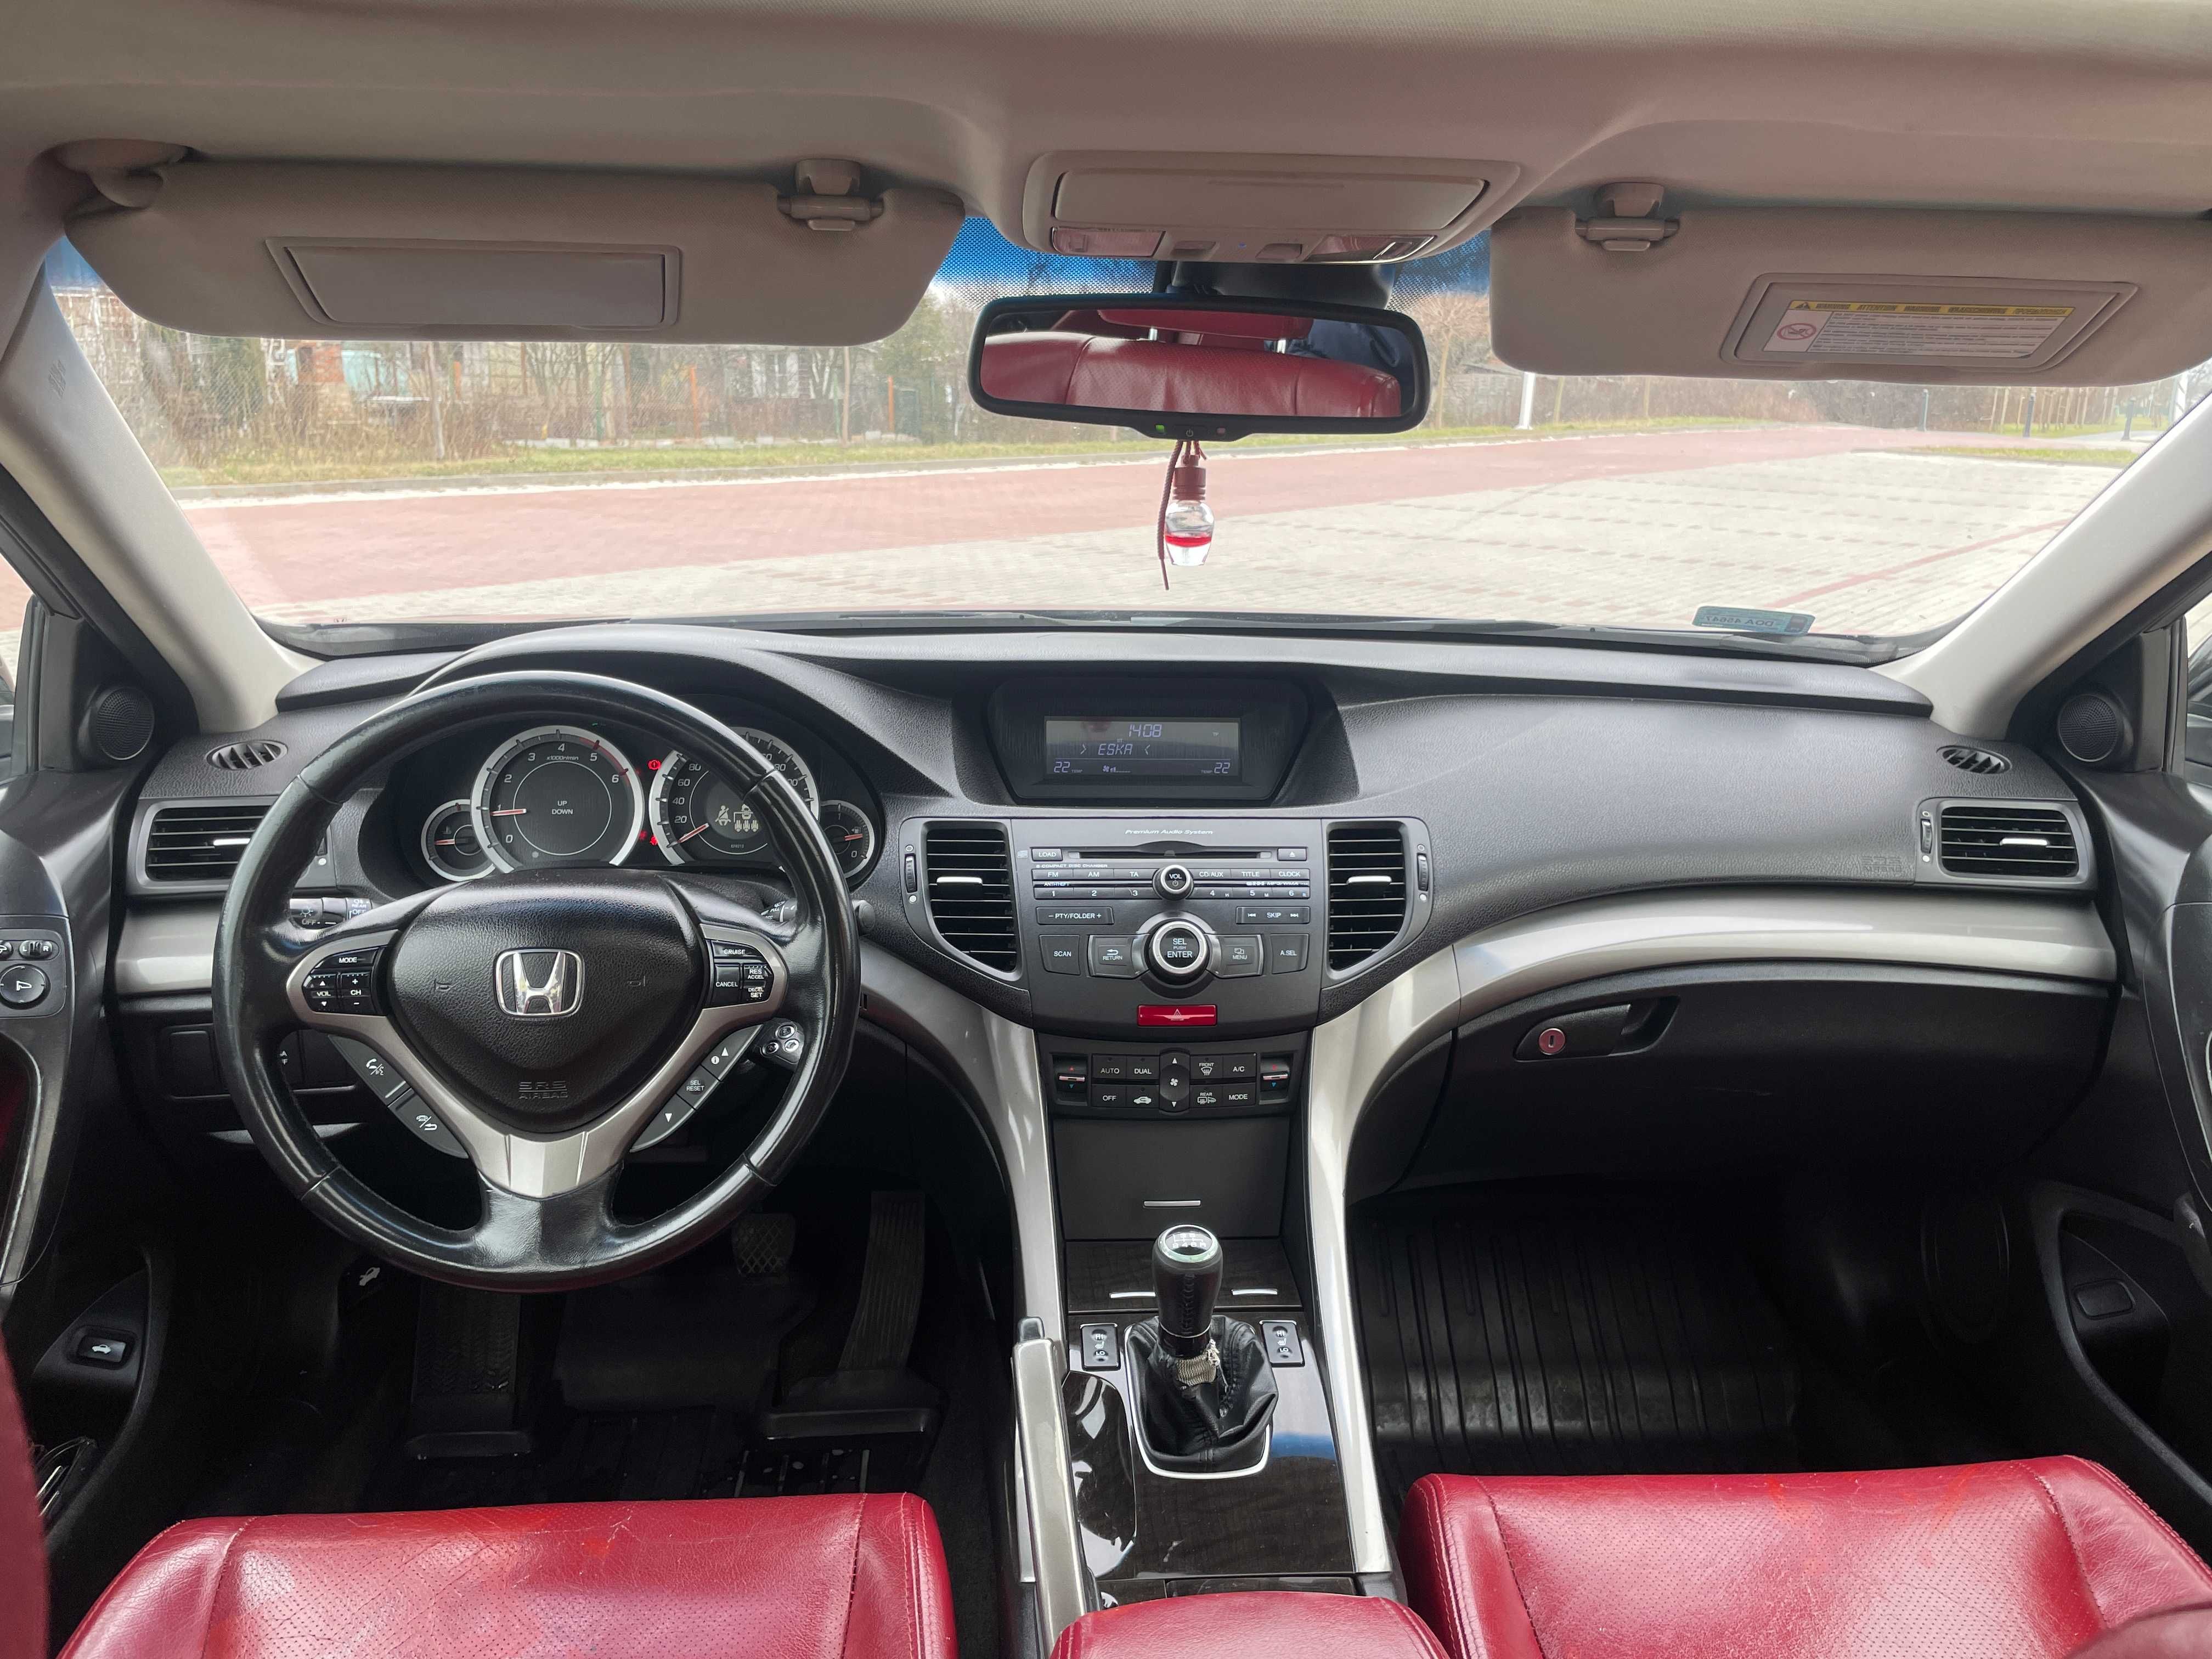 Honda Accord VIII 2.2 diesel 150km. salon Polska bezwypadkowa